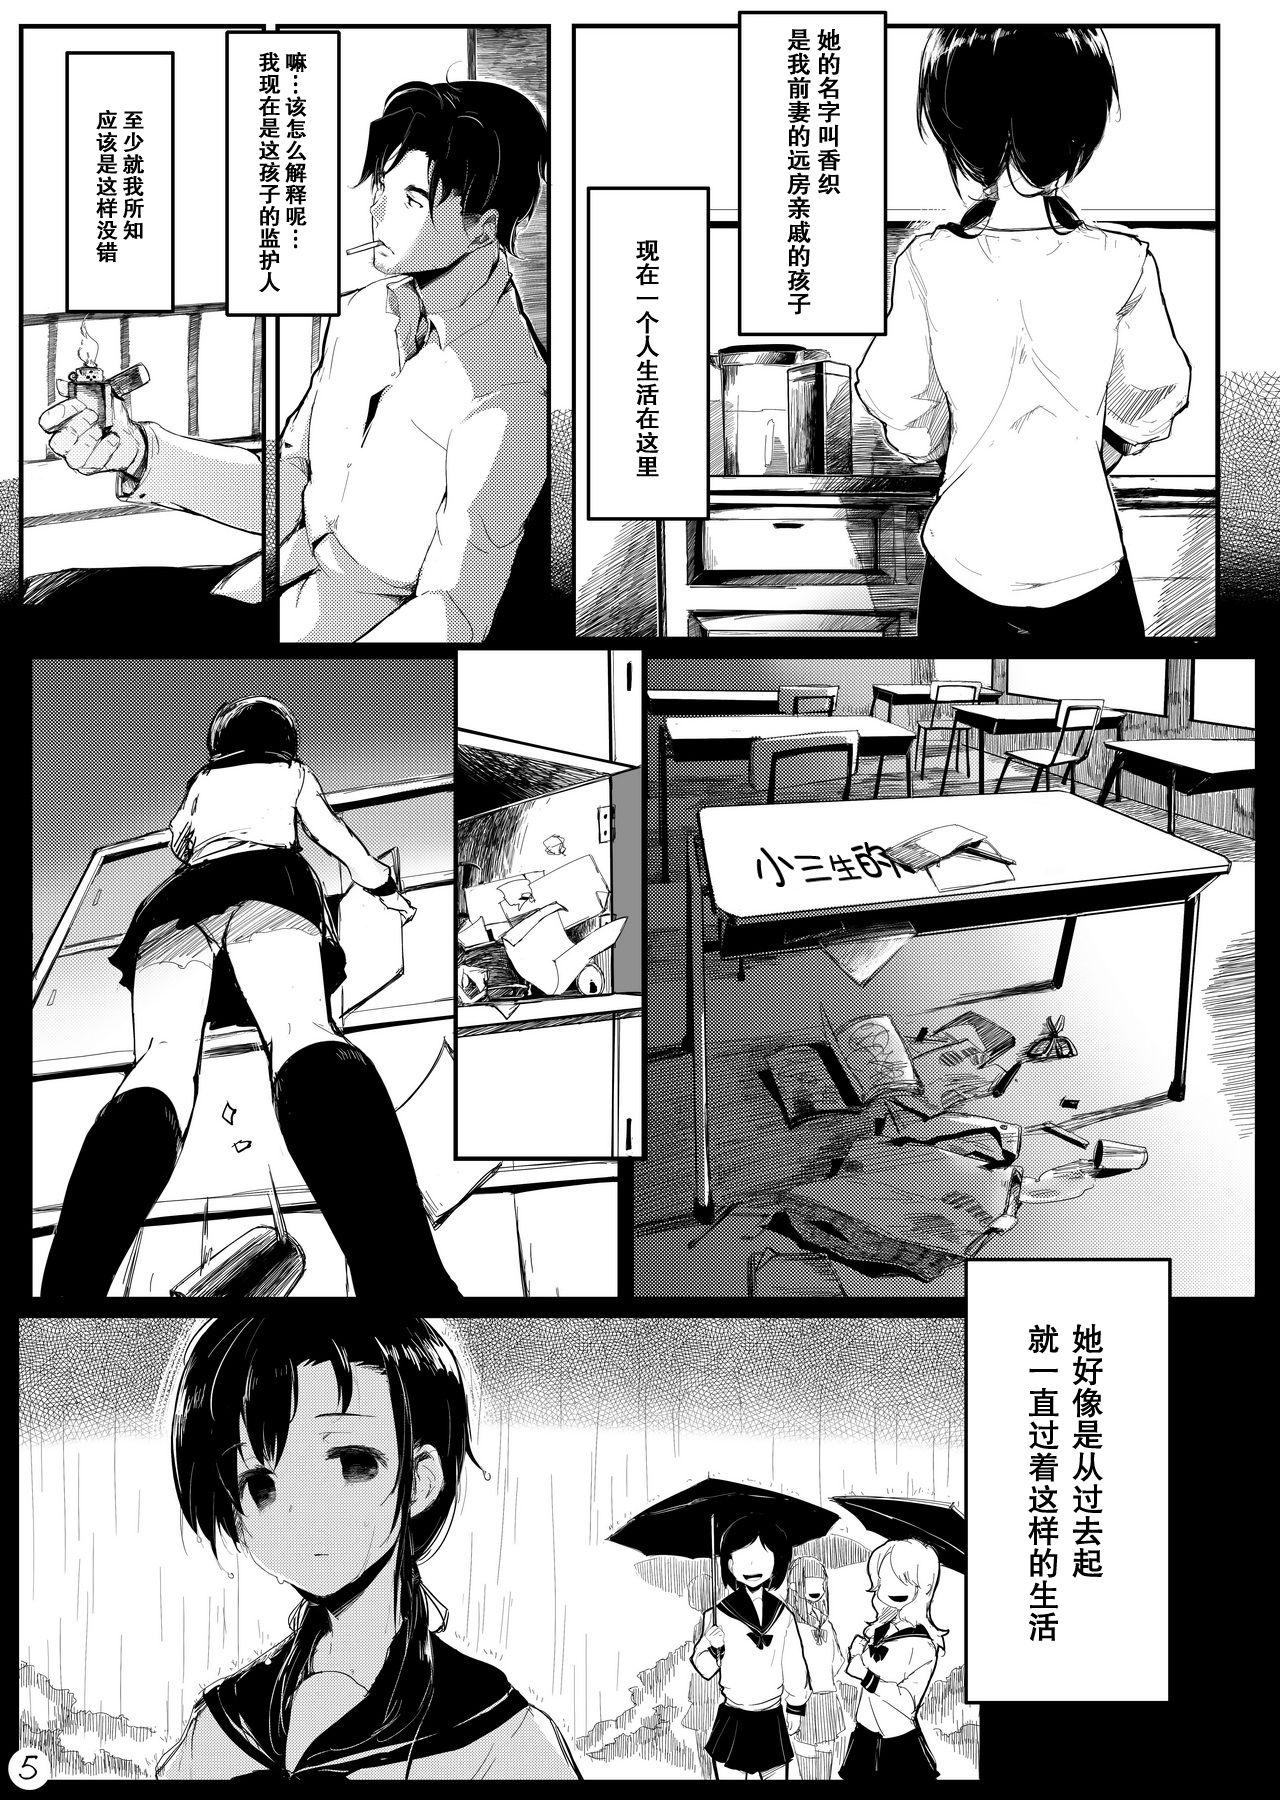 Booty Mijukuna ringo Safadinha - Page 6